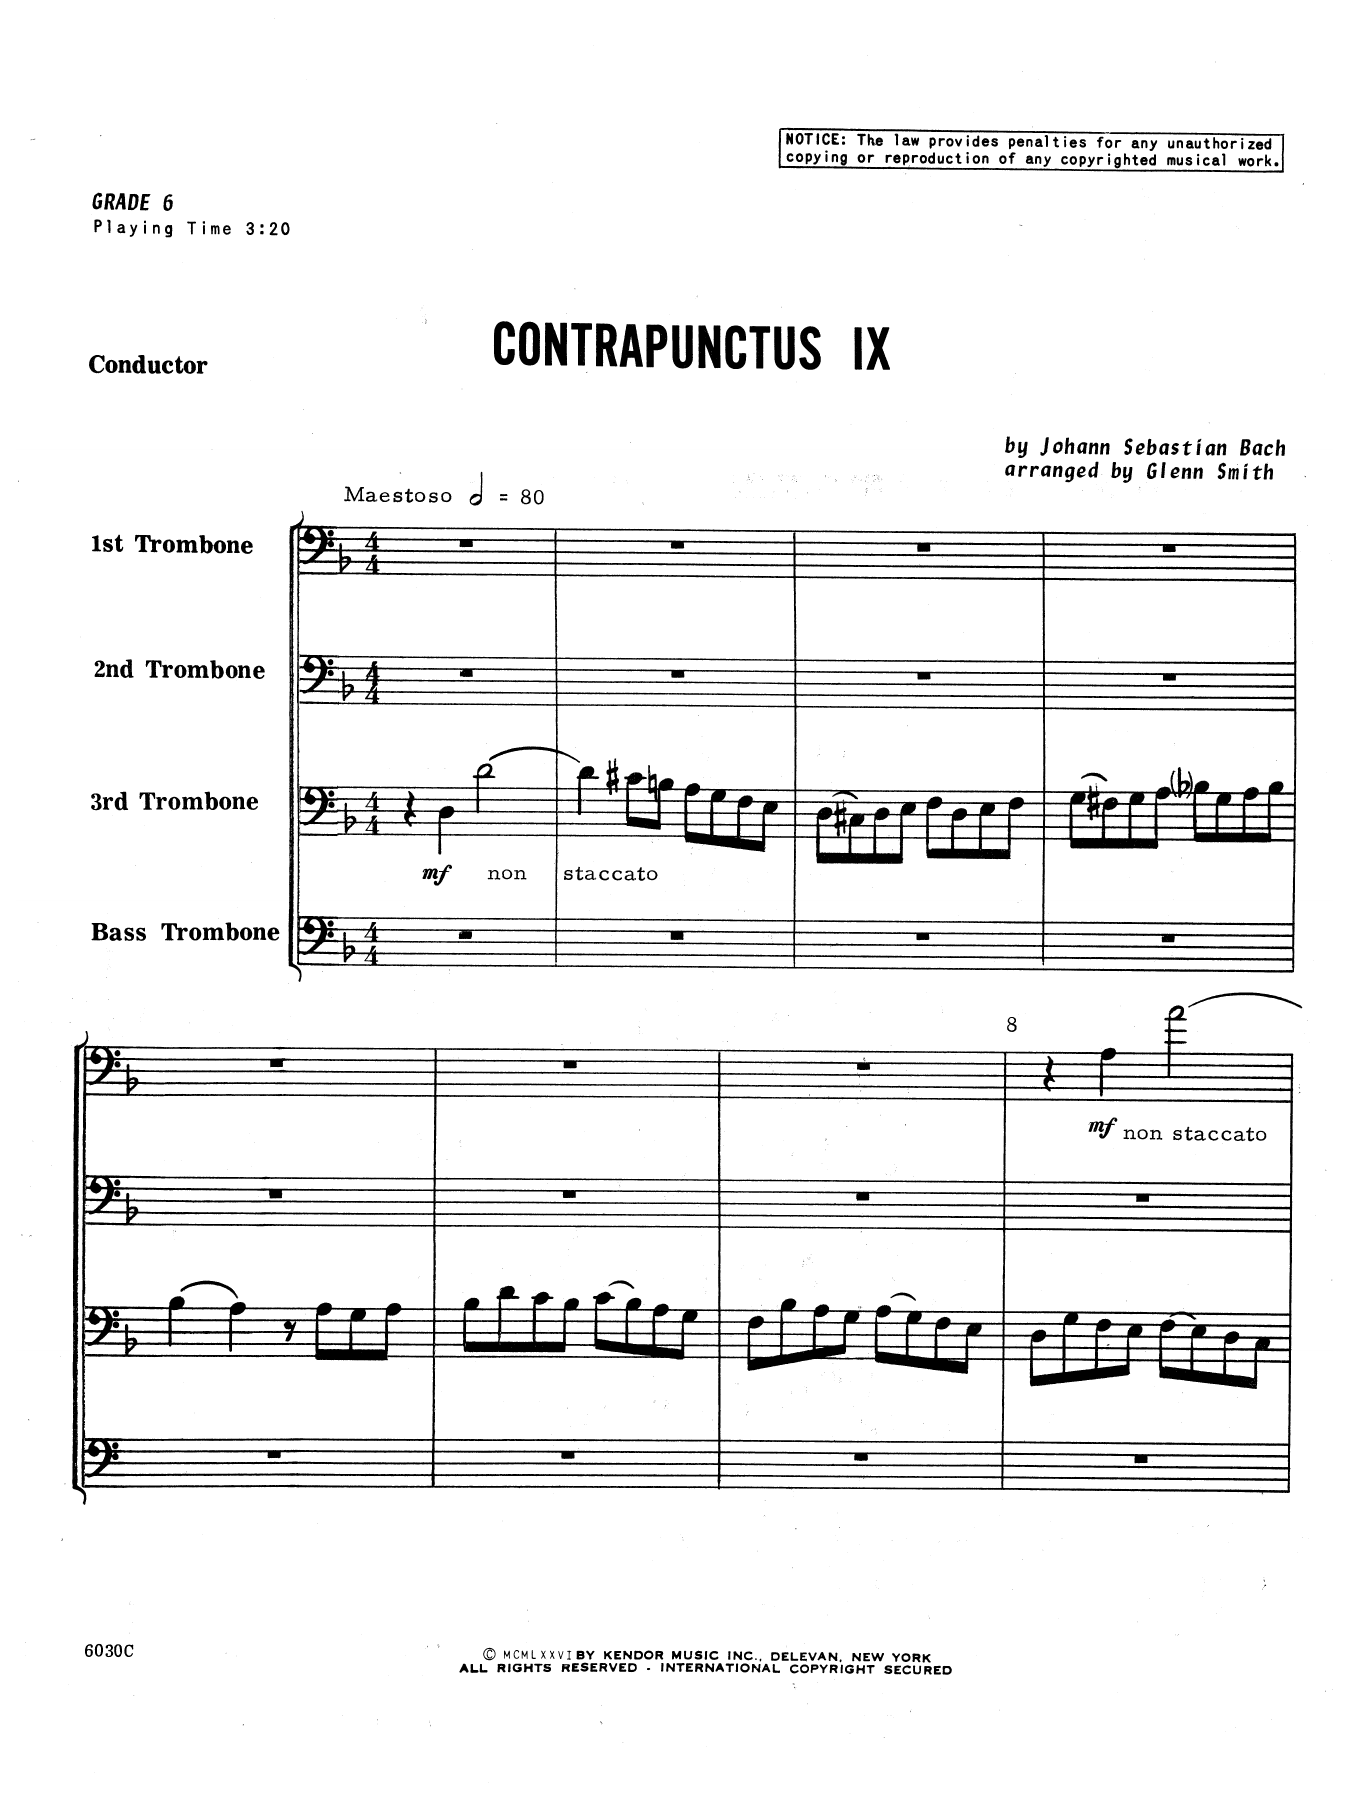 Download Glen Smith Contrapunctus IX - Full Score Sheet Music